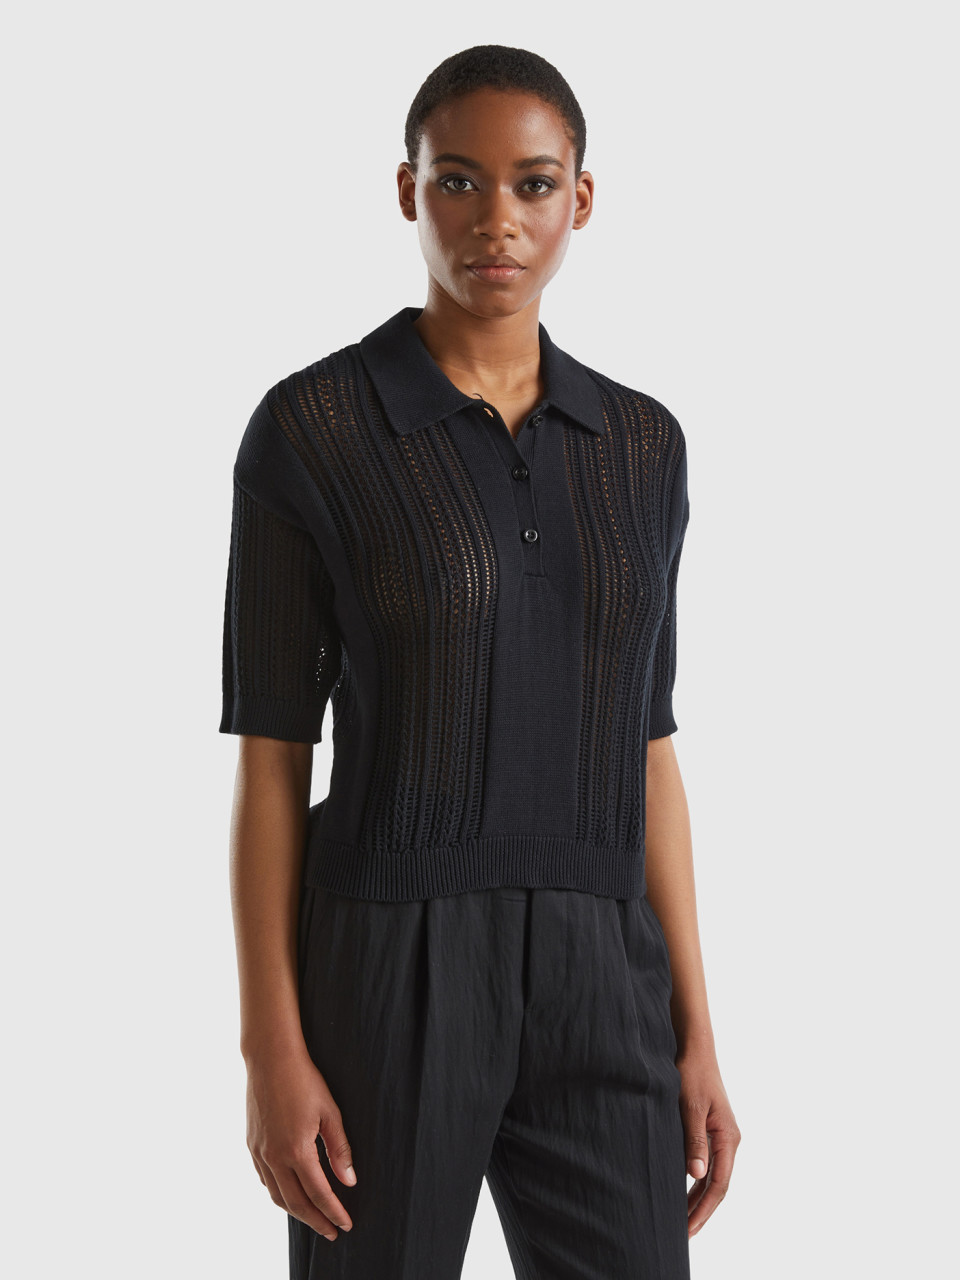 Benetton, Crochet Knit Polo Shirt, Black, Women